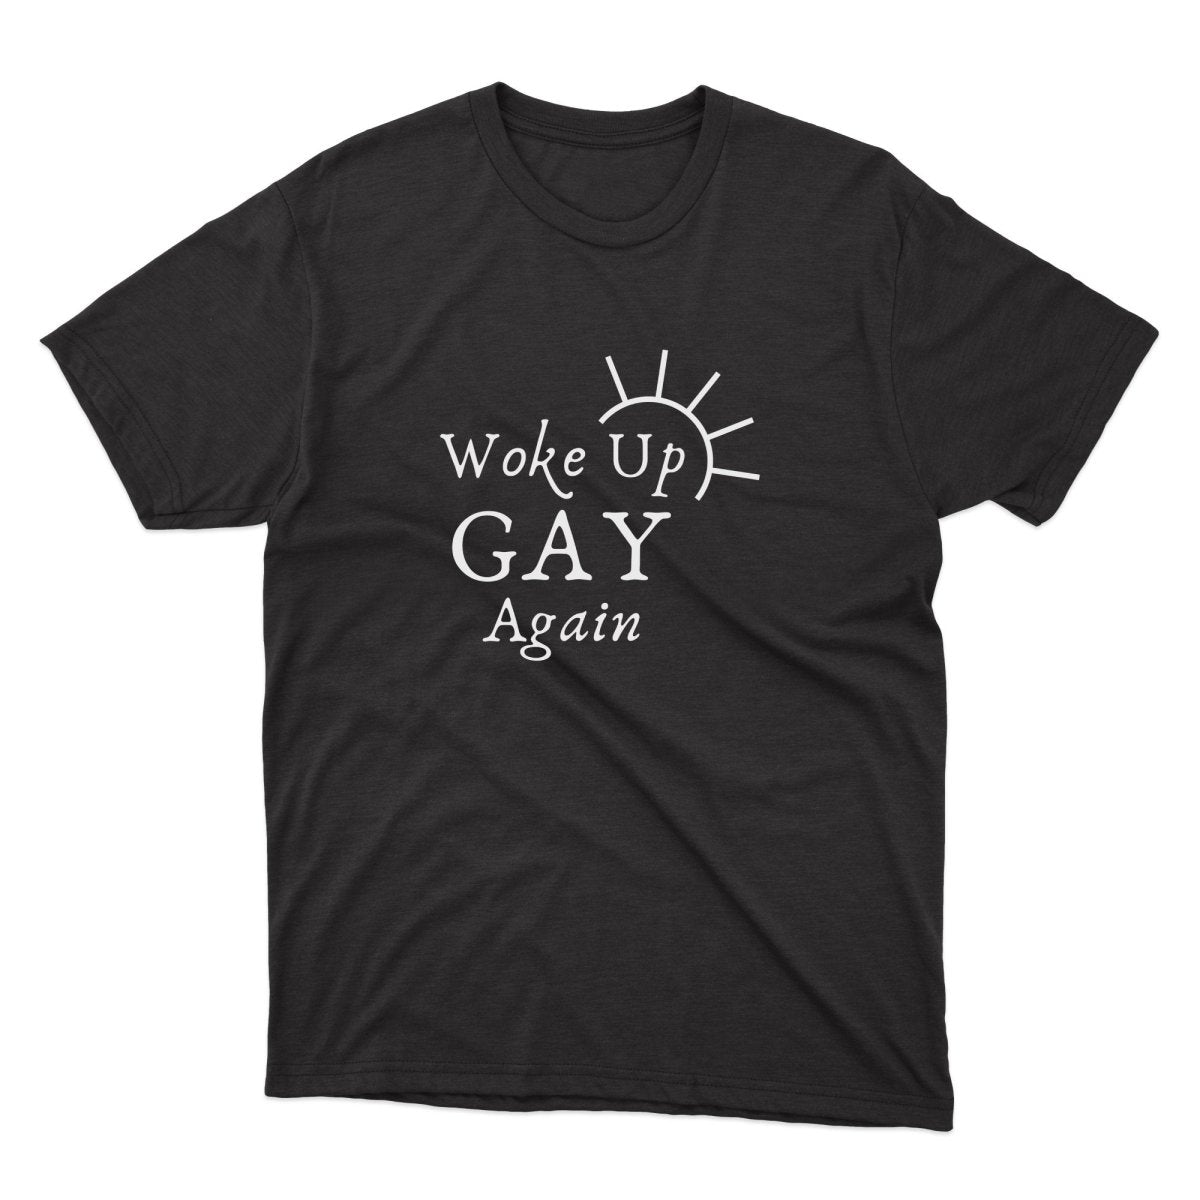 Woke Up Gay Shirt - stickerbullWoke Up Gay ShirtShirtsPrintifystickerbull17621947884560186872BlackSa black t - shirt that says woke up gay again